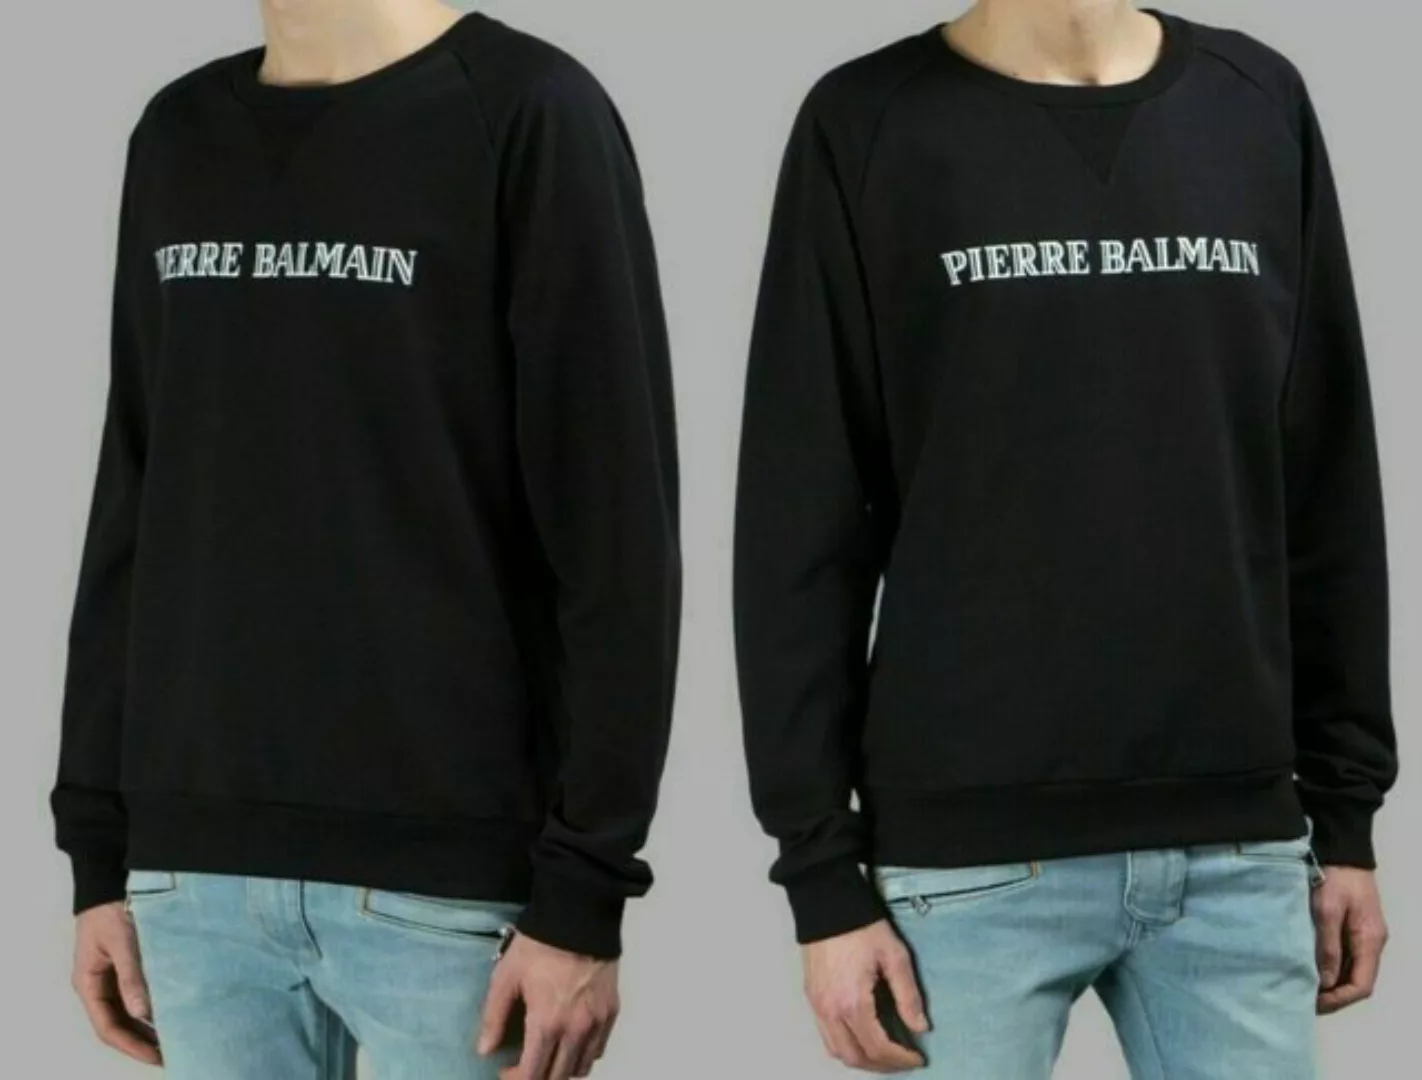 Balmain Sweatshirt Pierre Balmain Iconic Logo Sweatshirt Jumper Sweater Pul günstig online kaufen